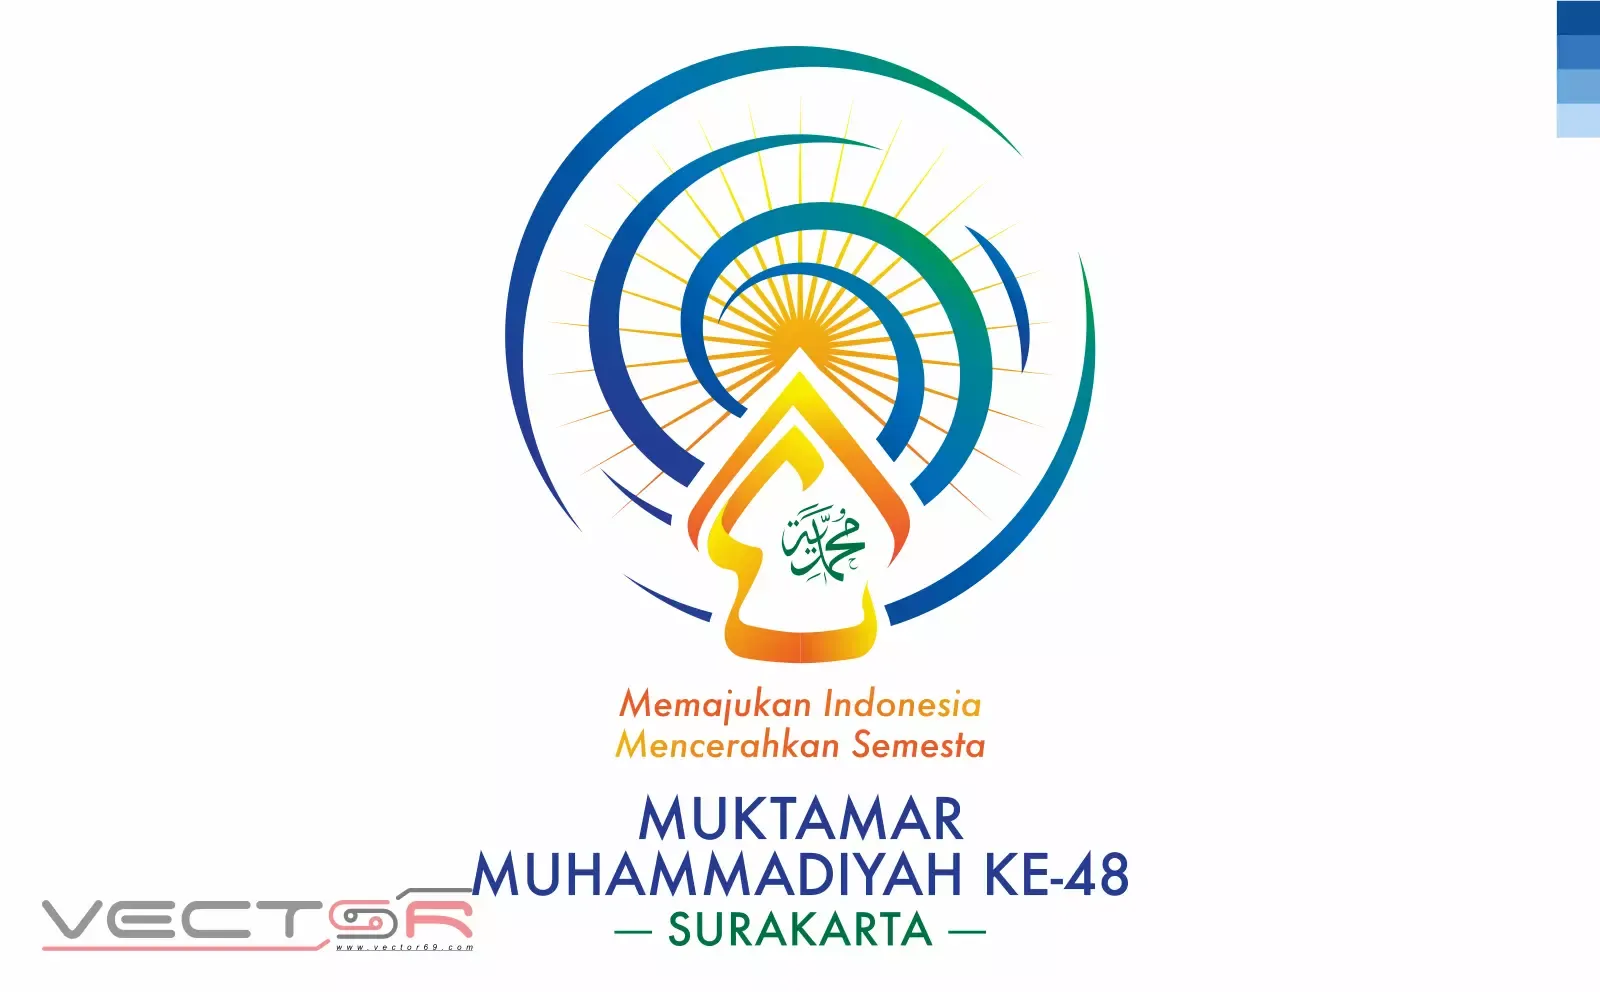 Muktamar Muhammadiyah ke-48 Surakarta Logo - Download Vector File Encapsulated PostScript (.EPS)